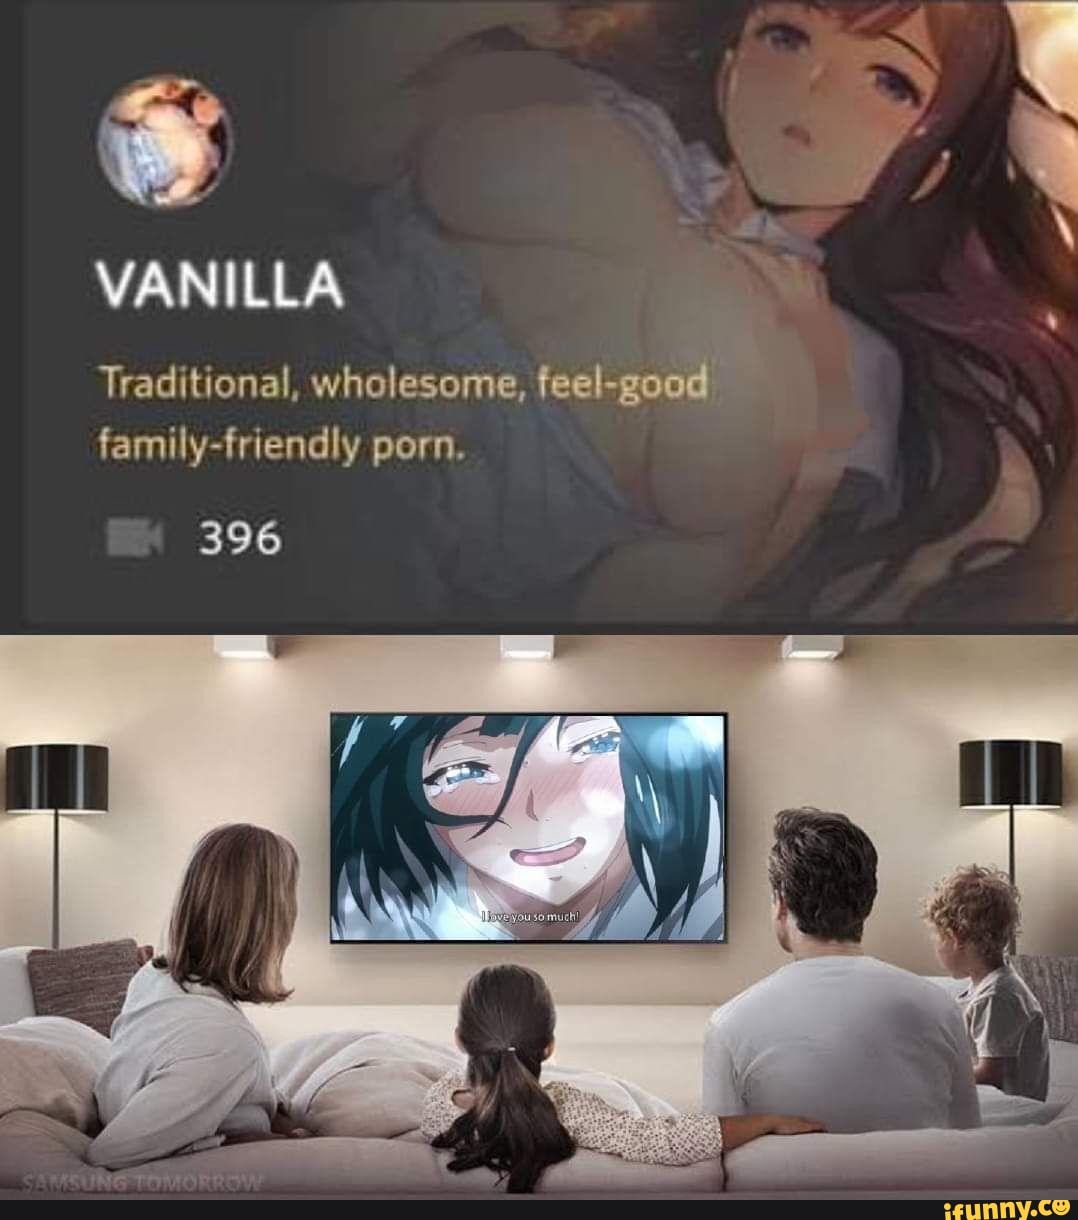 Feel good porn